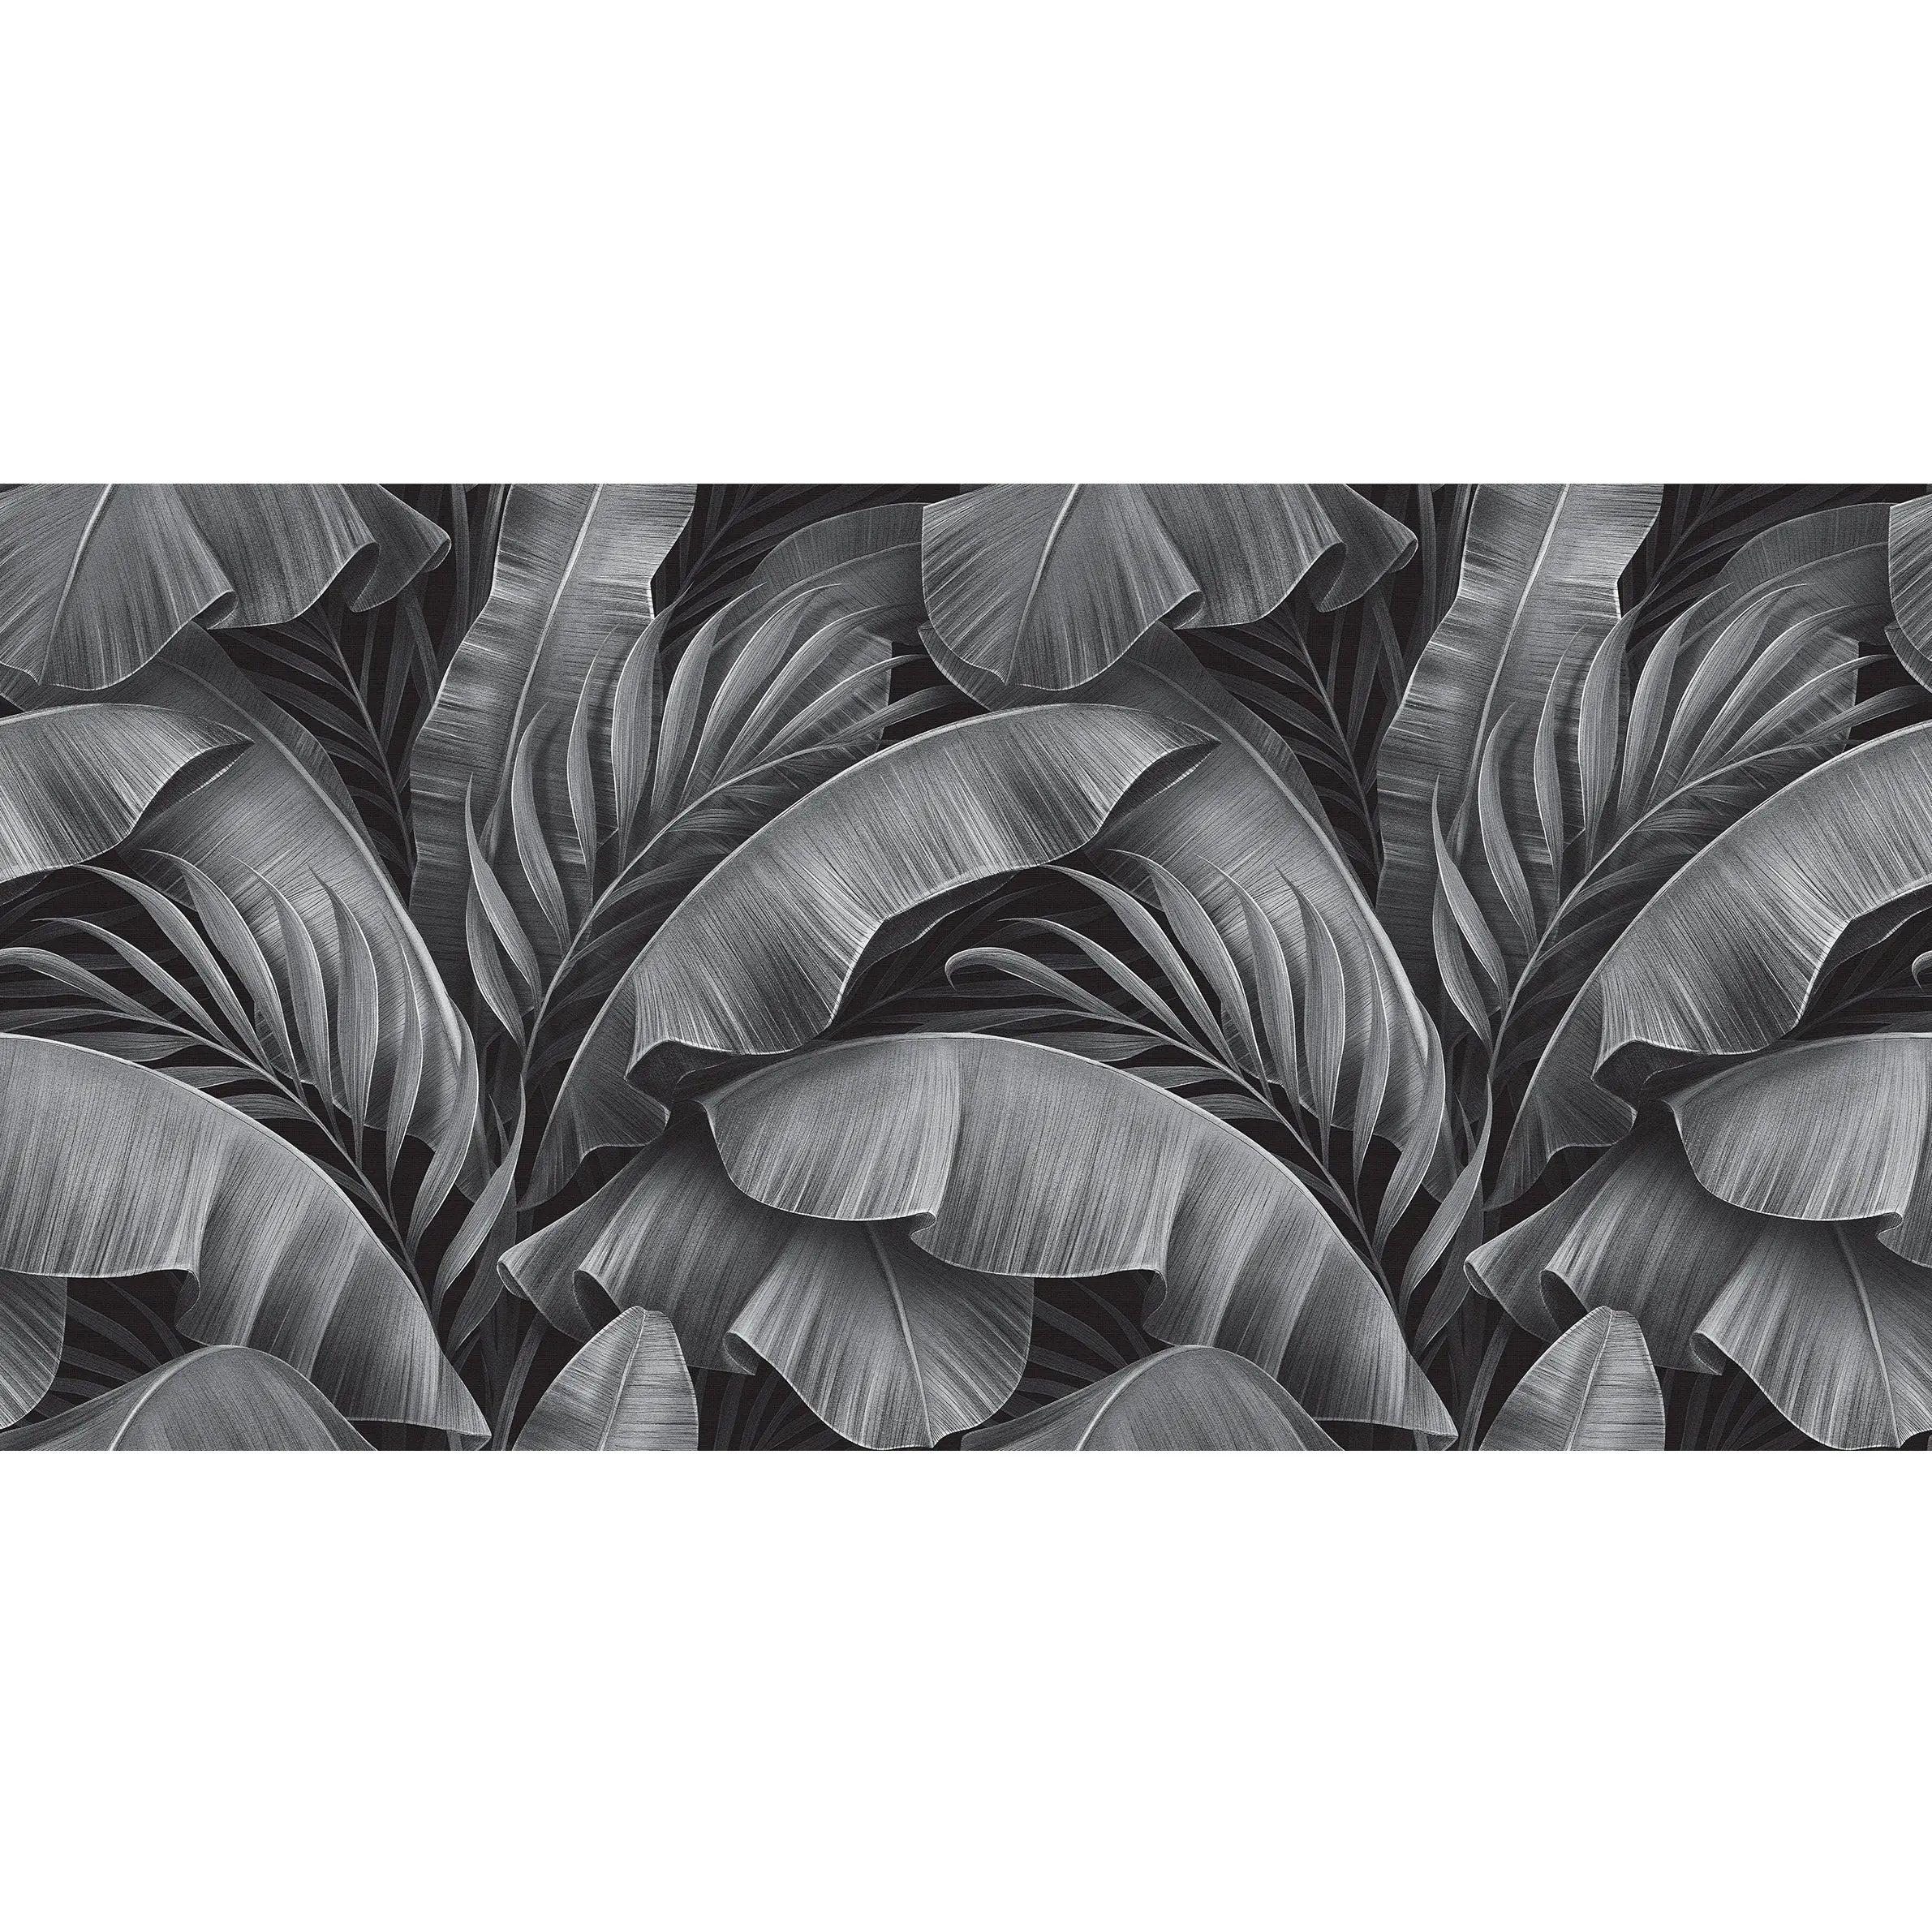 3075-E / Peel and Stick Boho Wallpaper: Tropical Palm Leave Design, Perfect for Accent Wall Decor - Artevella